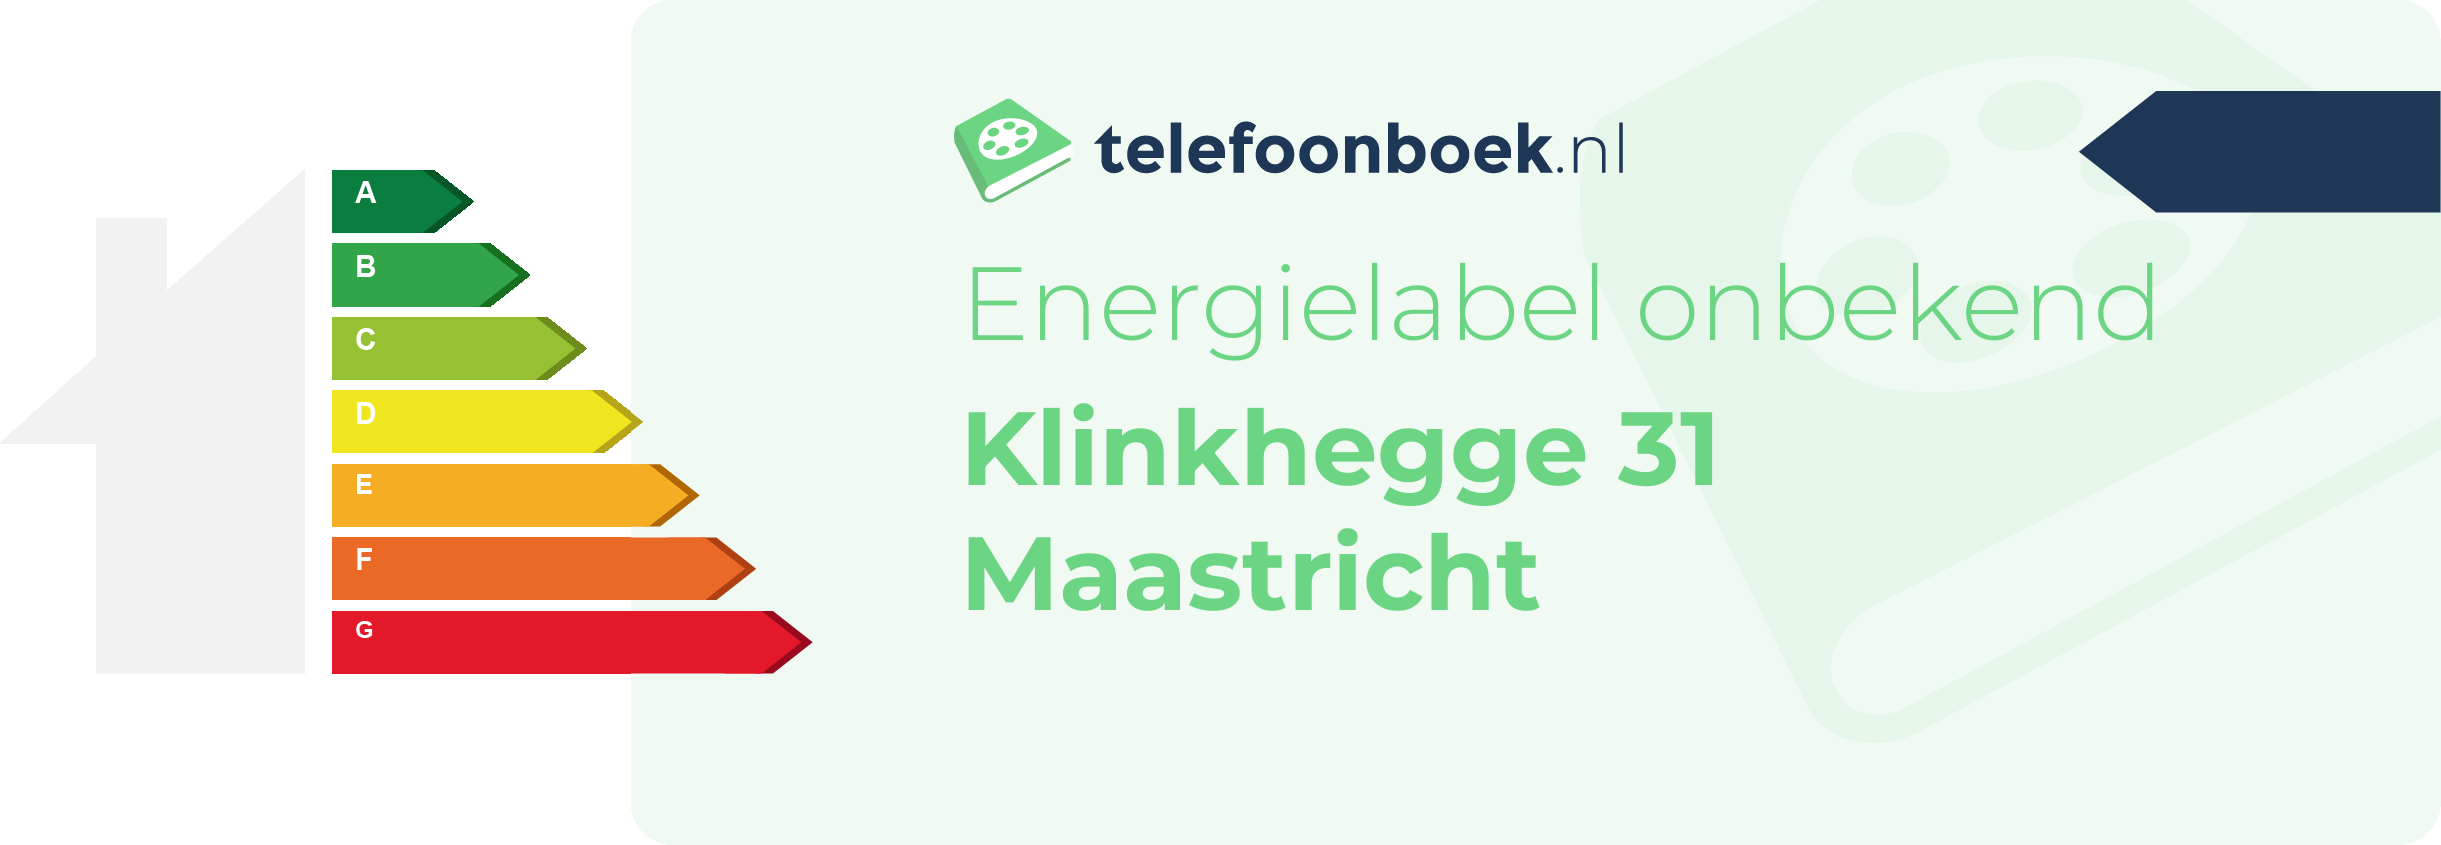 Energielabel Klinkhegge 31 Maastricht